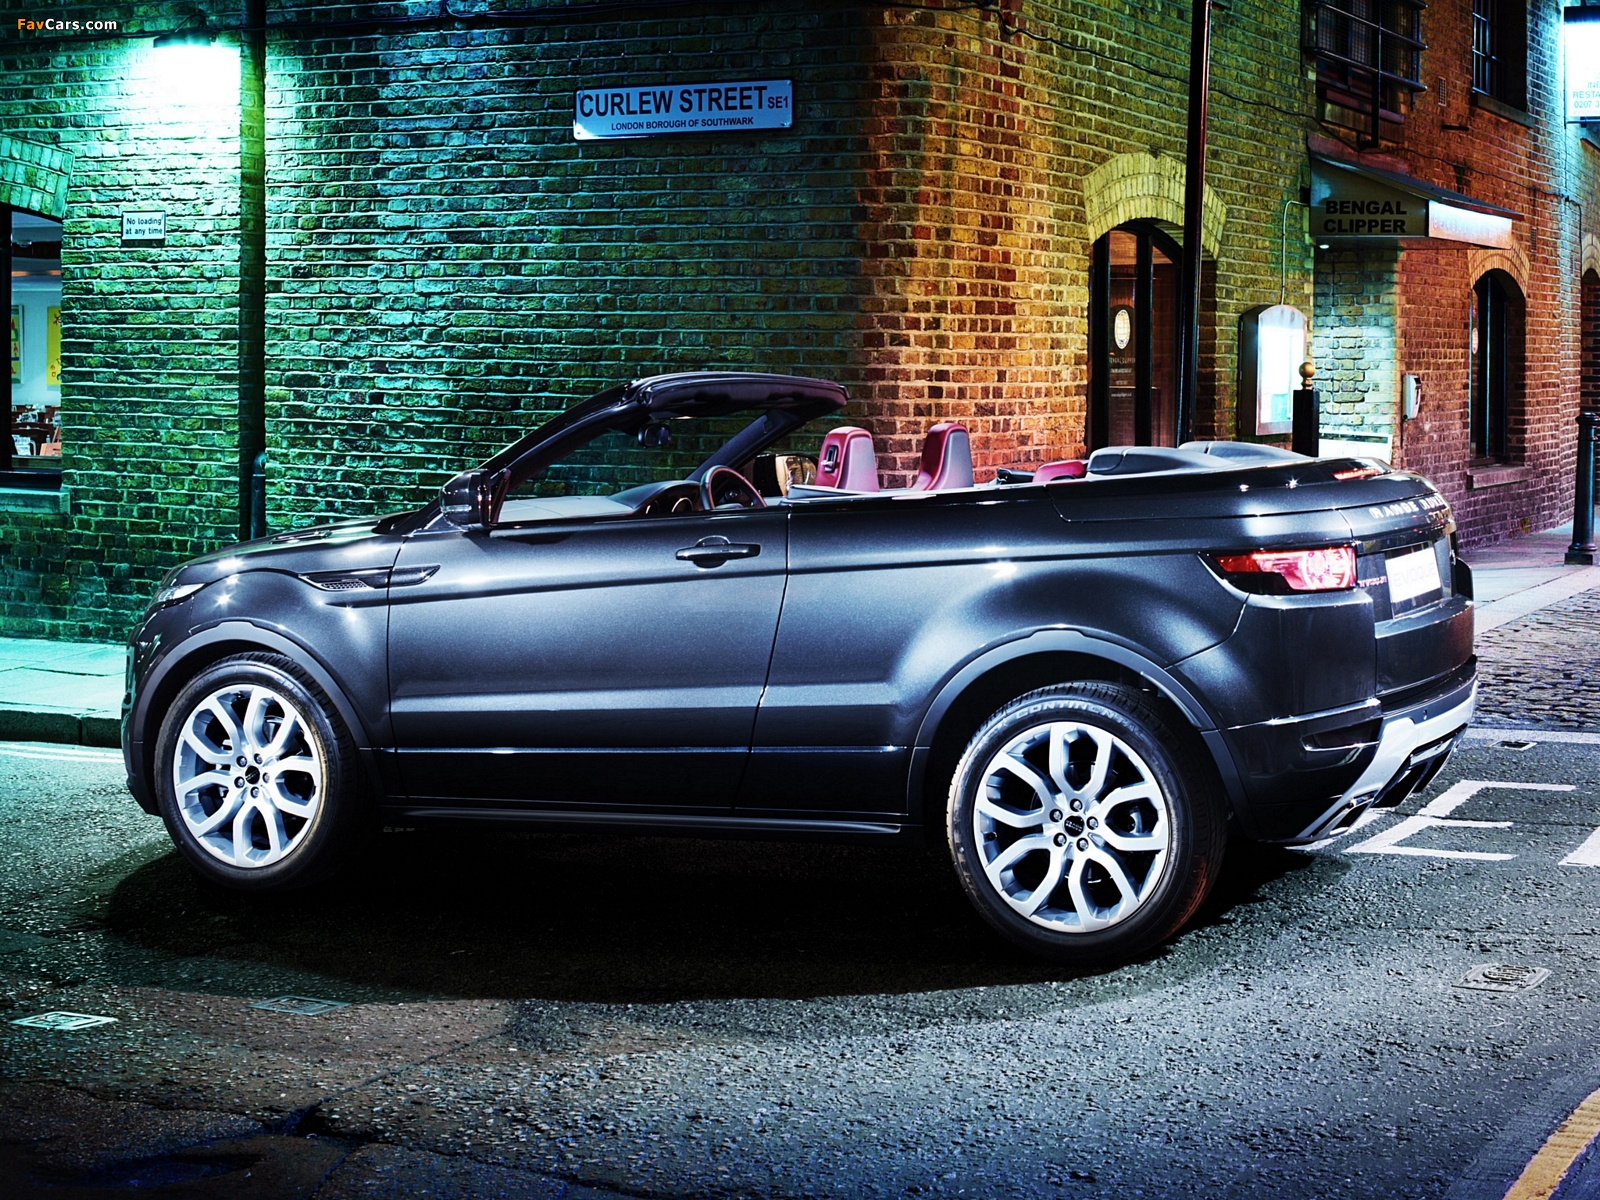 Range Rover Evoque Convertible Concept 2012 pictures (1600 x 1200)